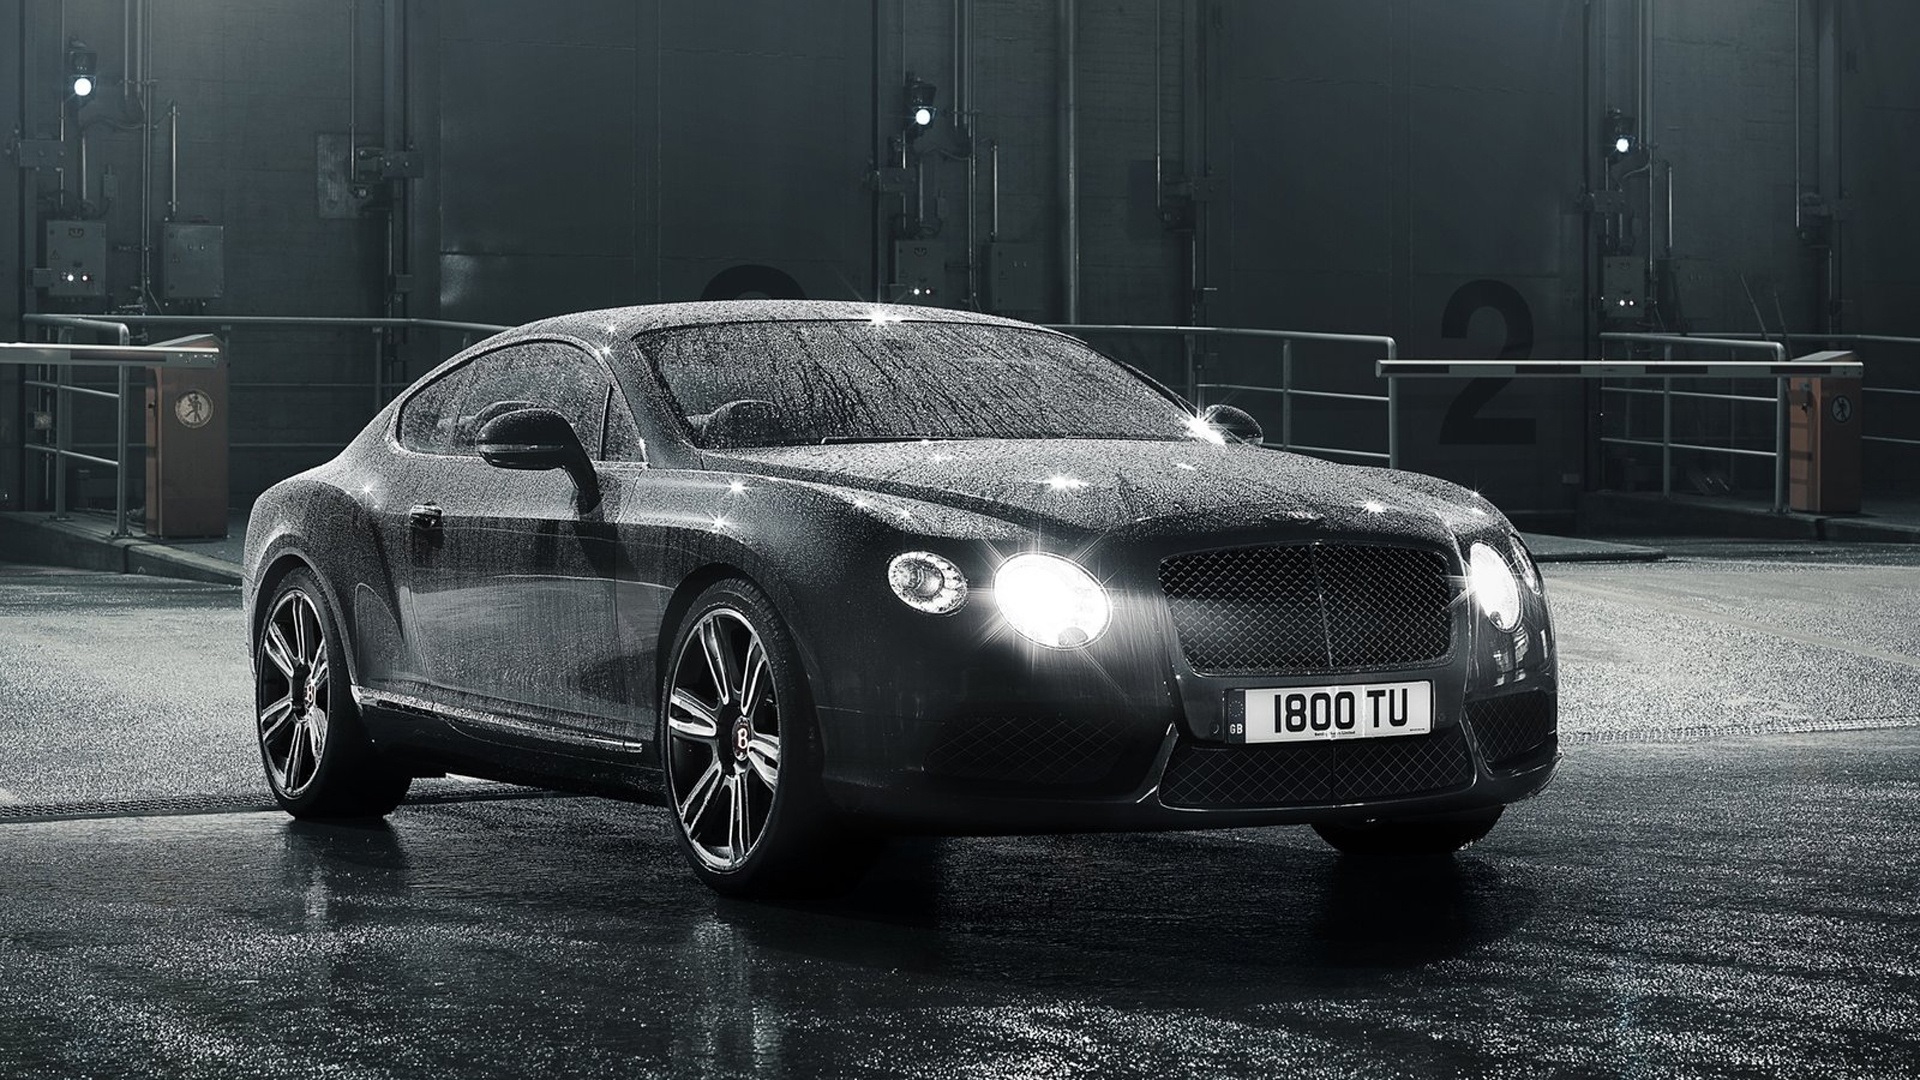 Bentley - Continental - GT - black - car - after - rain - water - drops_1920x1080.jpg